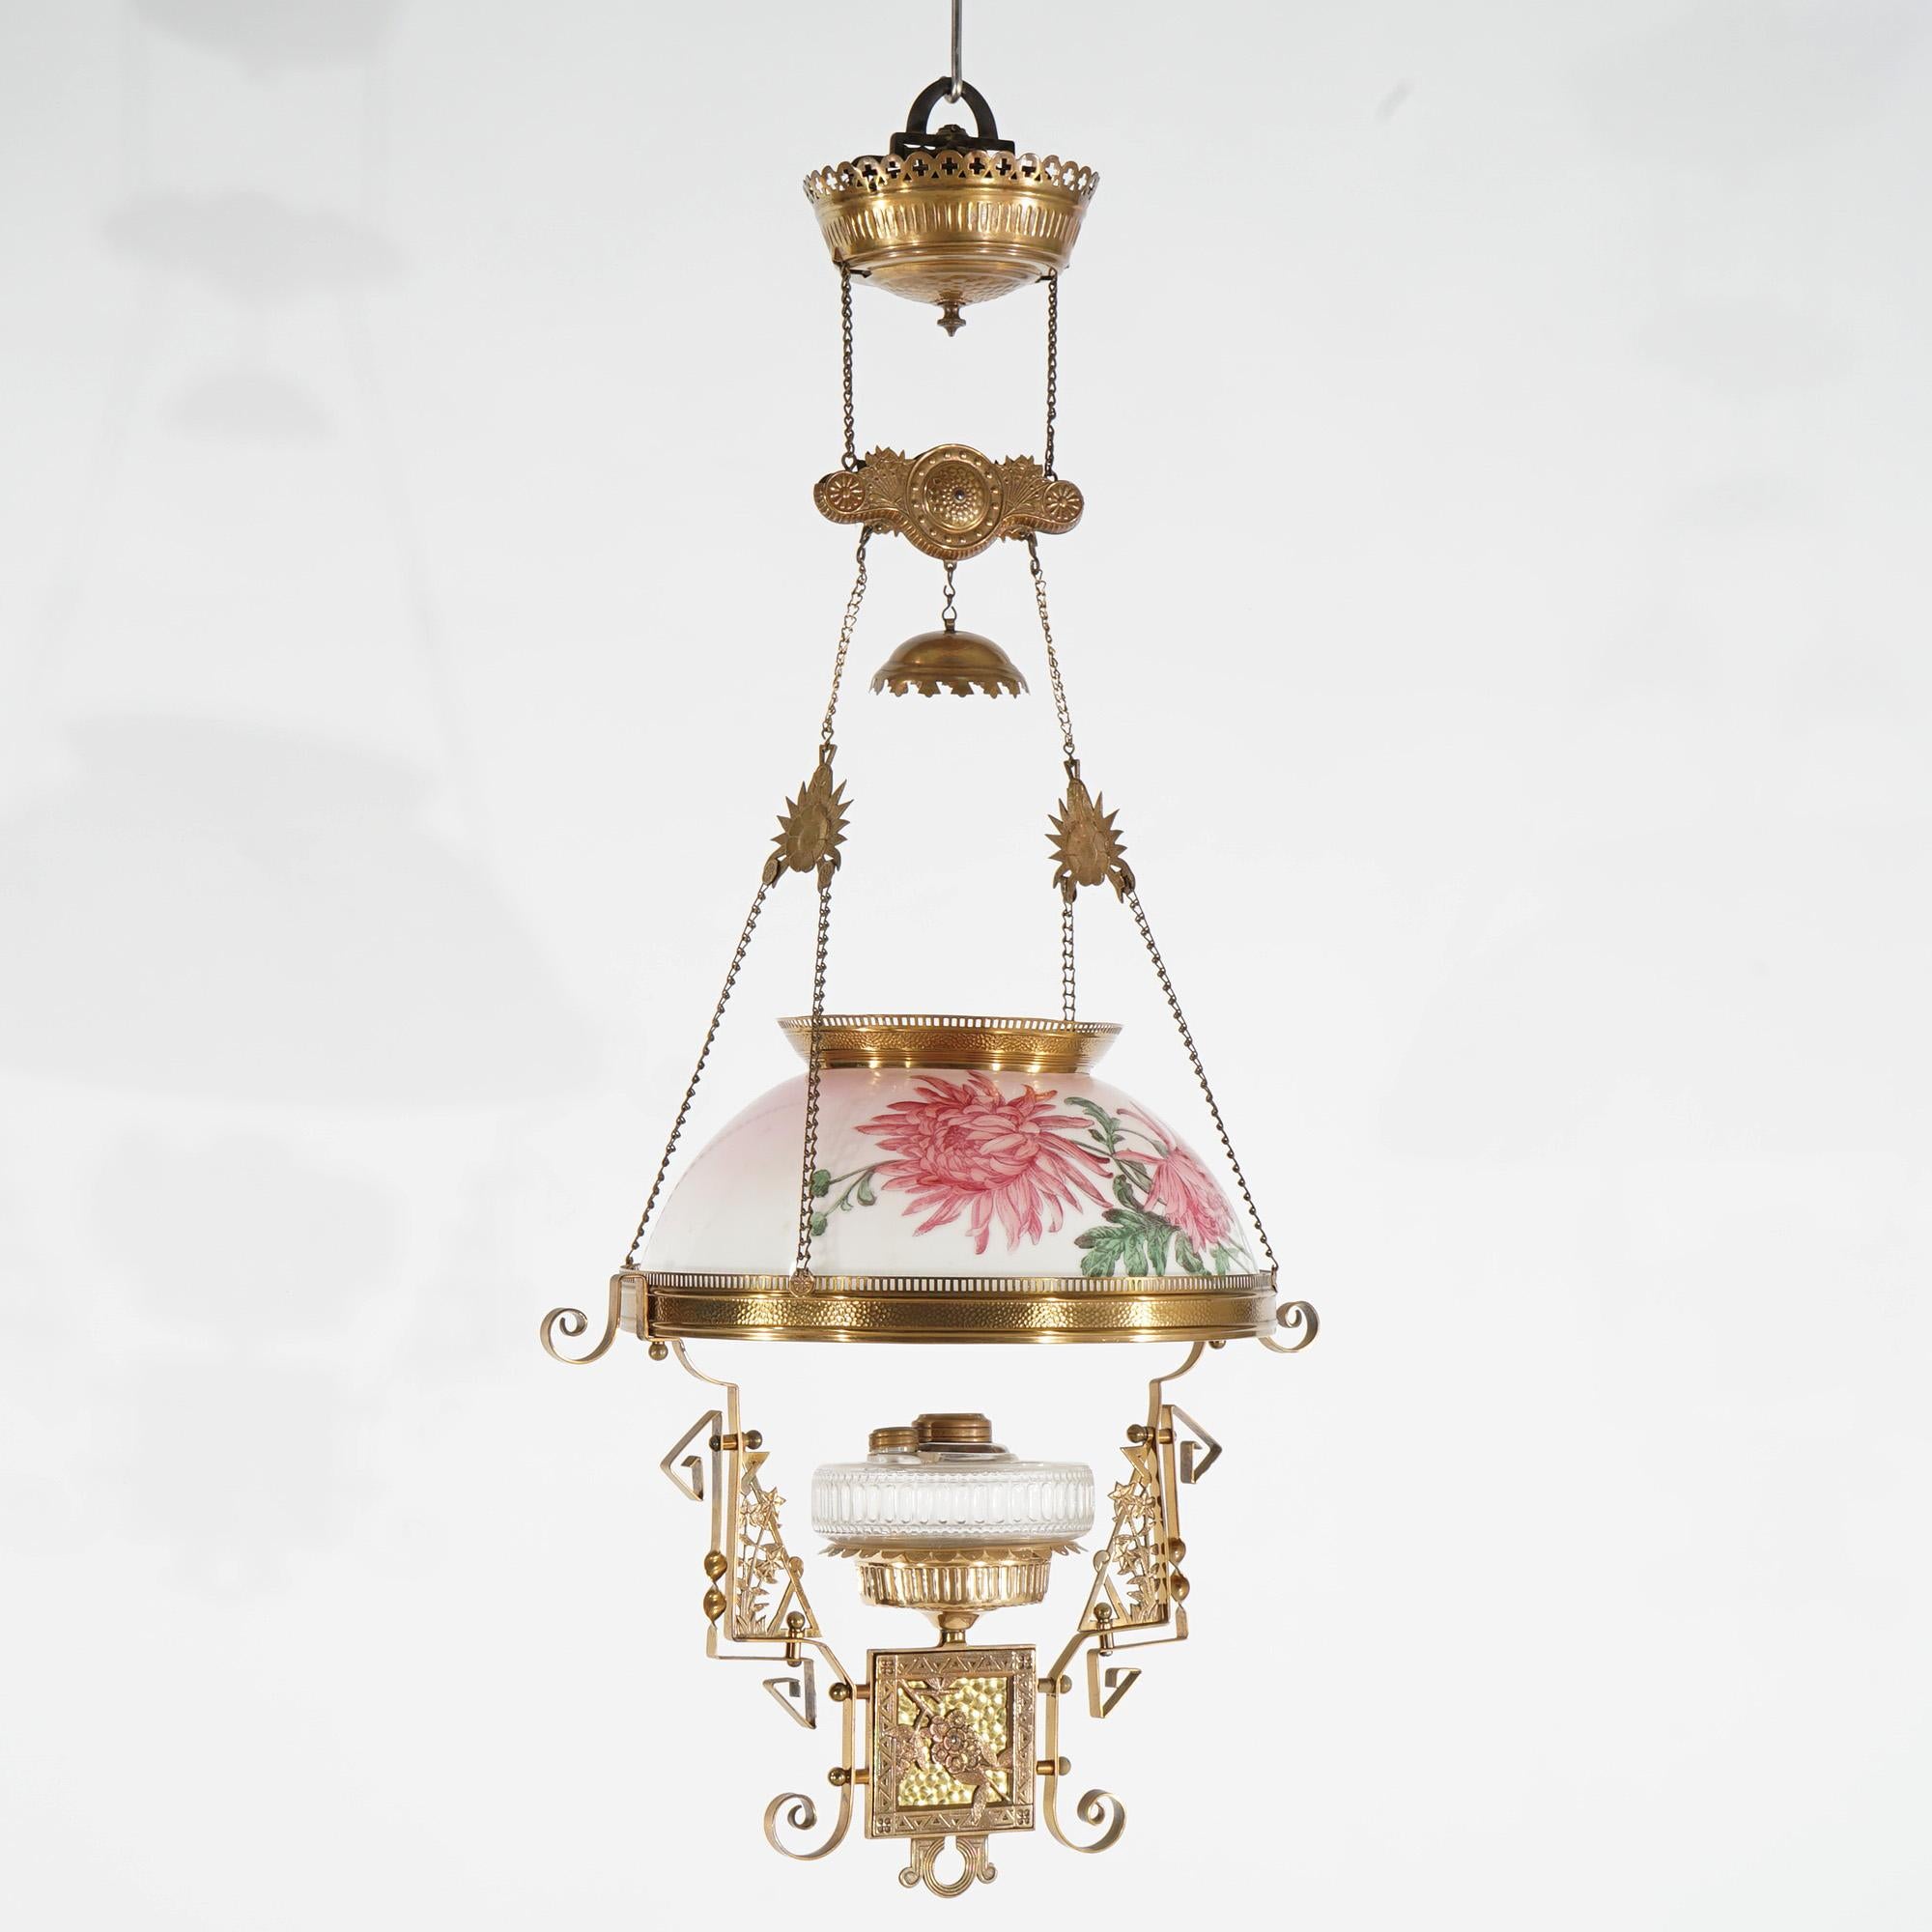 Antique Aesthetic Movement Hand Painted Hanging Kerosene Lamp C1890 For Sale 2